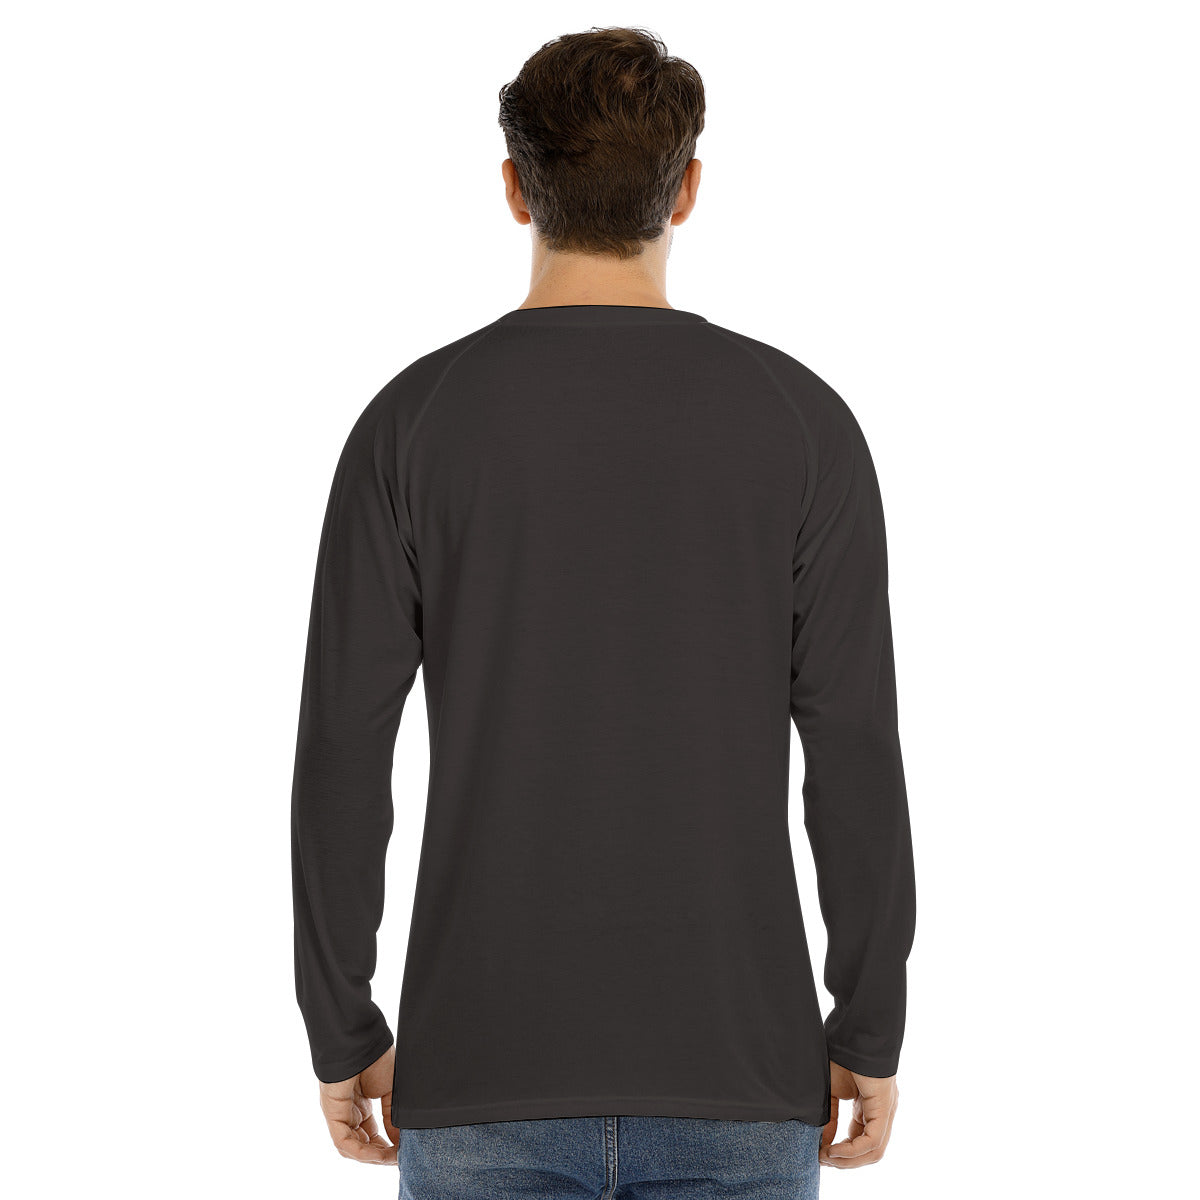 Tang 104a -- Men's Long Sleeve T-shirt With Raglan Sleeve